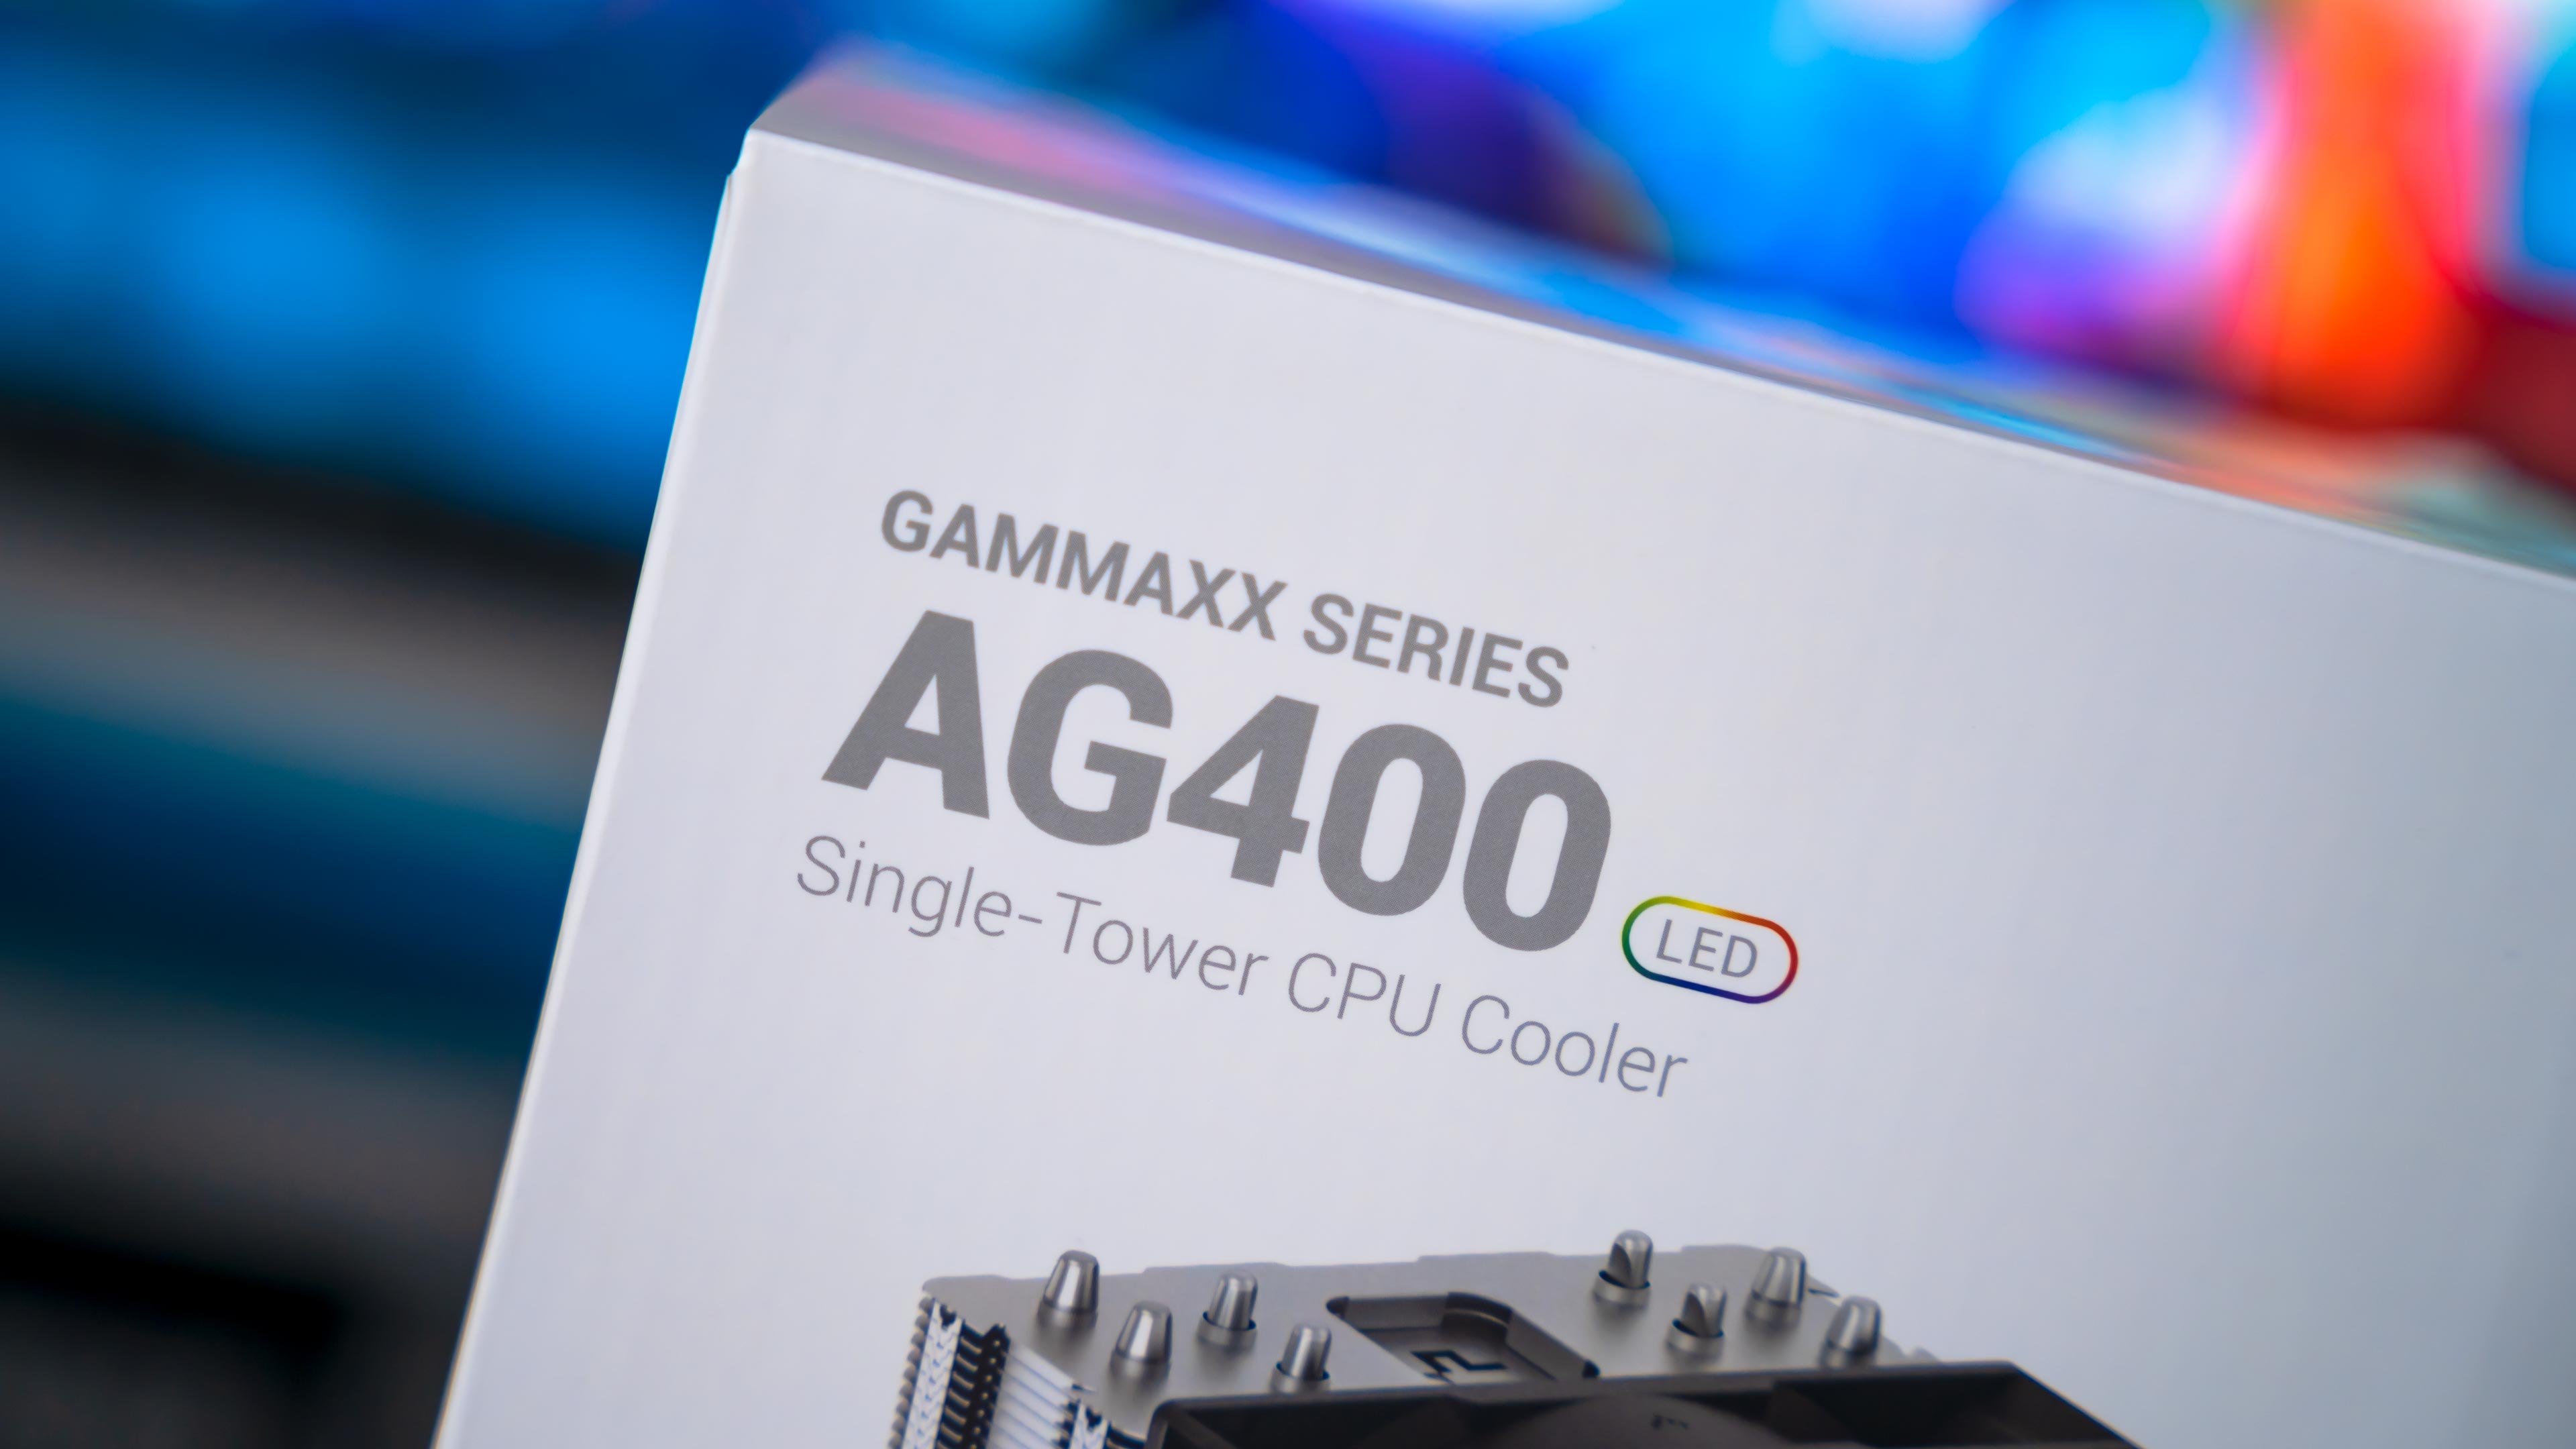 Deepcool Gammaxx AG400 LED Box (2)